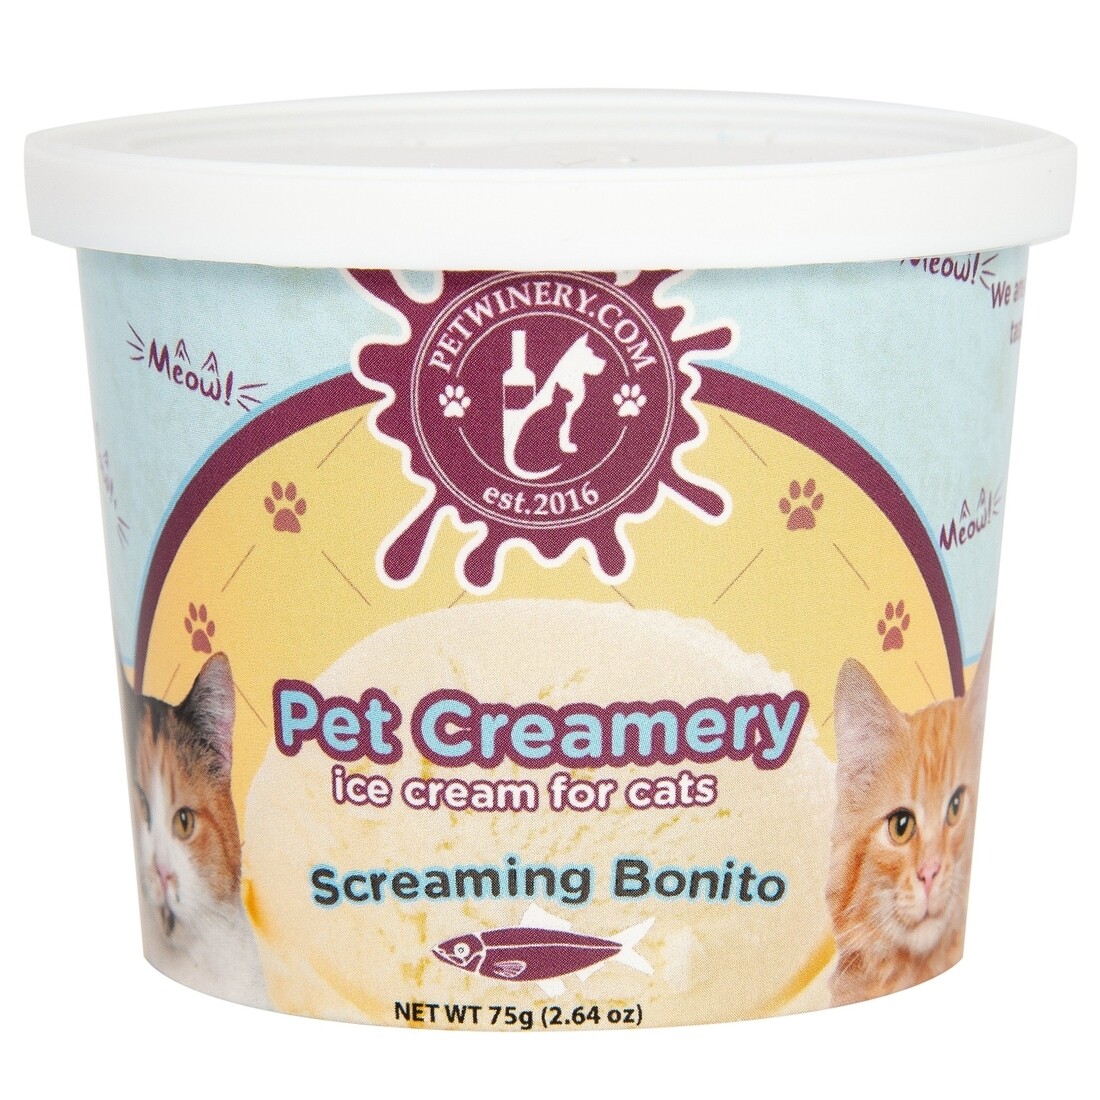 Pet Creamery - Screaming Bonito Cat Ice Cream